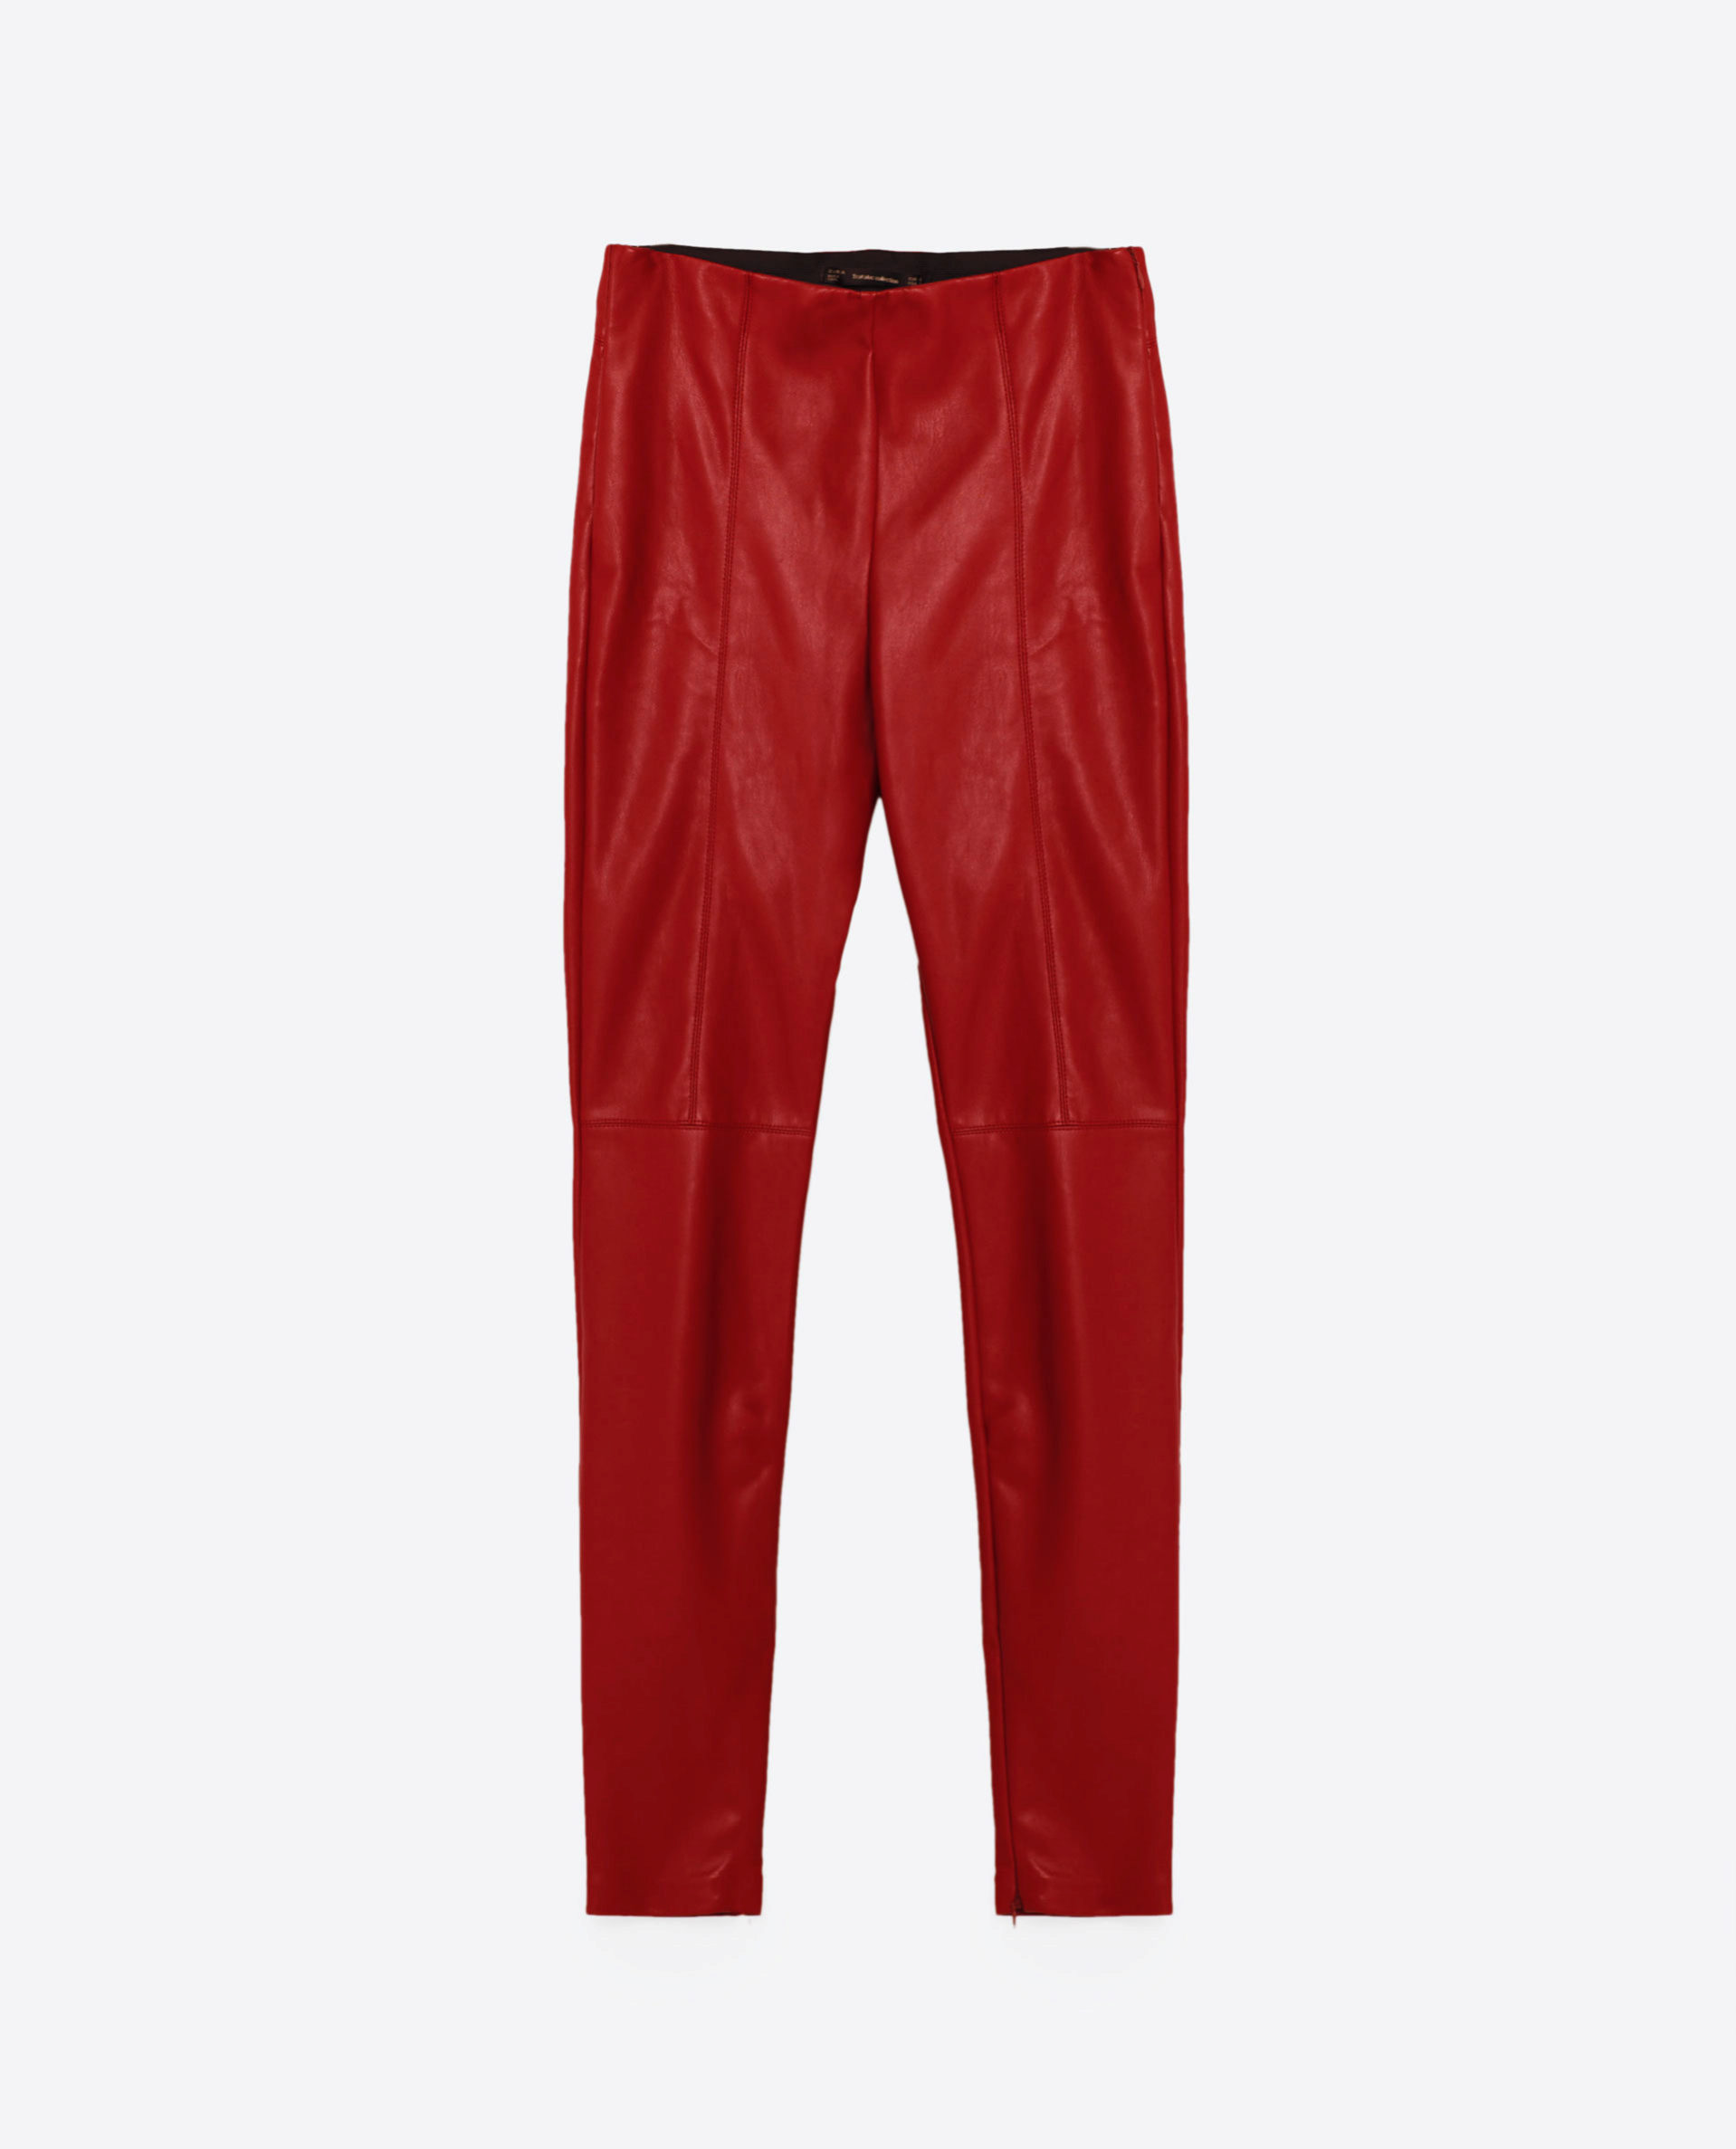 Legging de cuero rojo. De Zara, 19,95 euros.